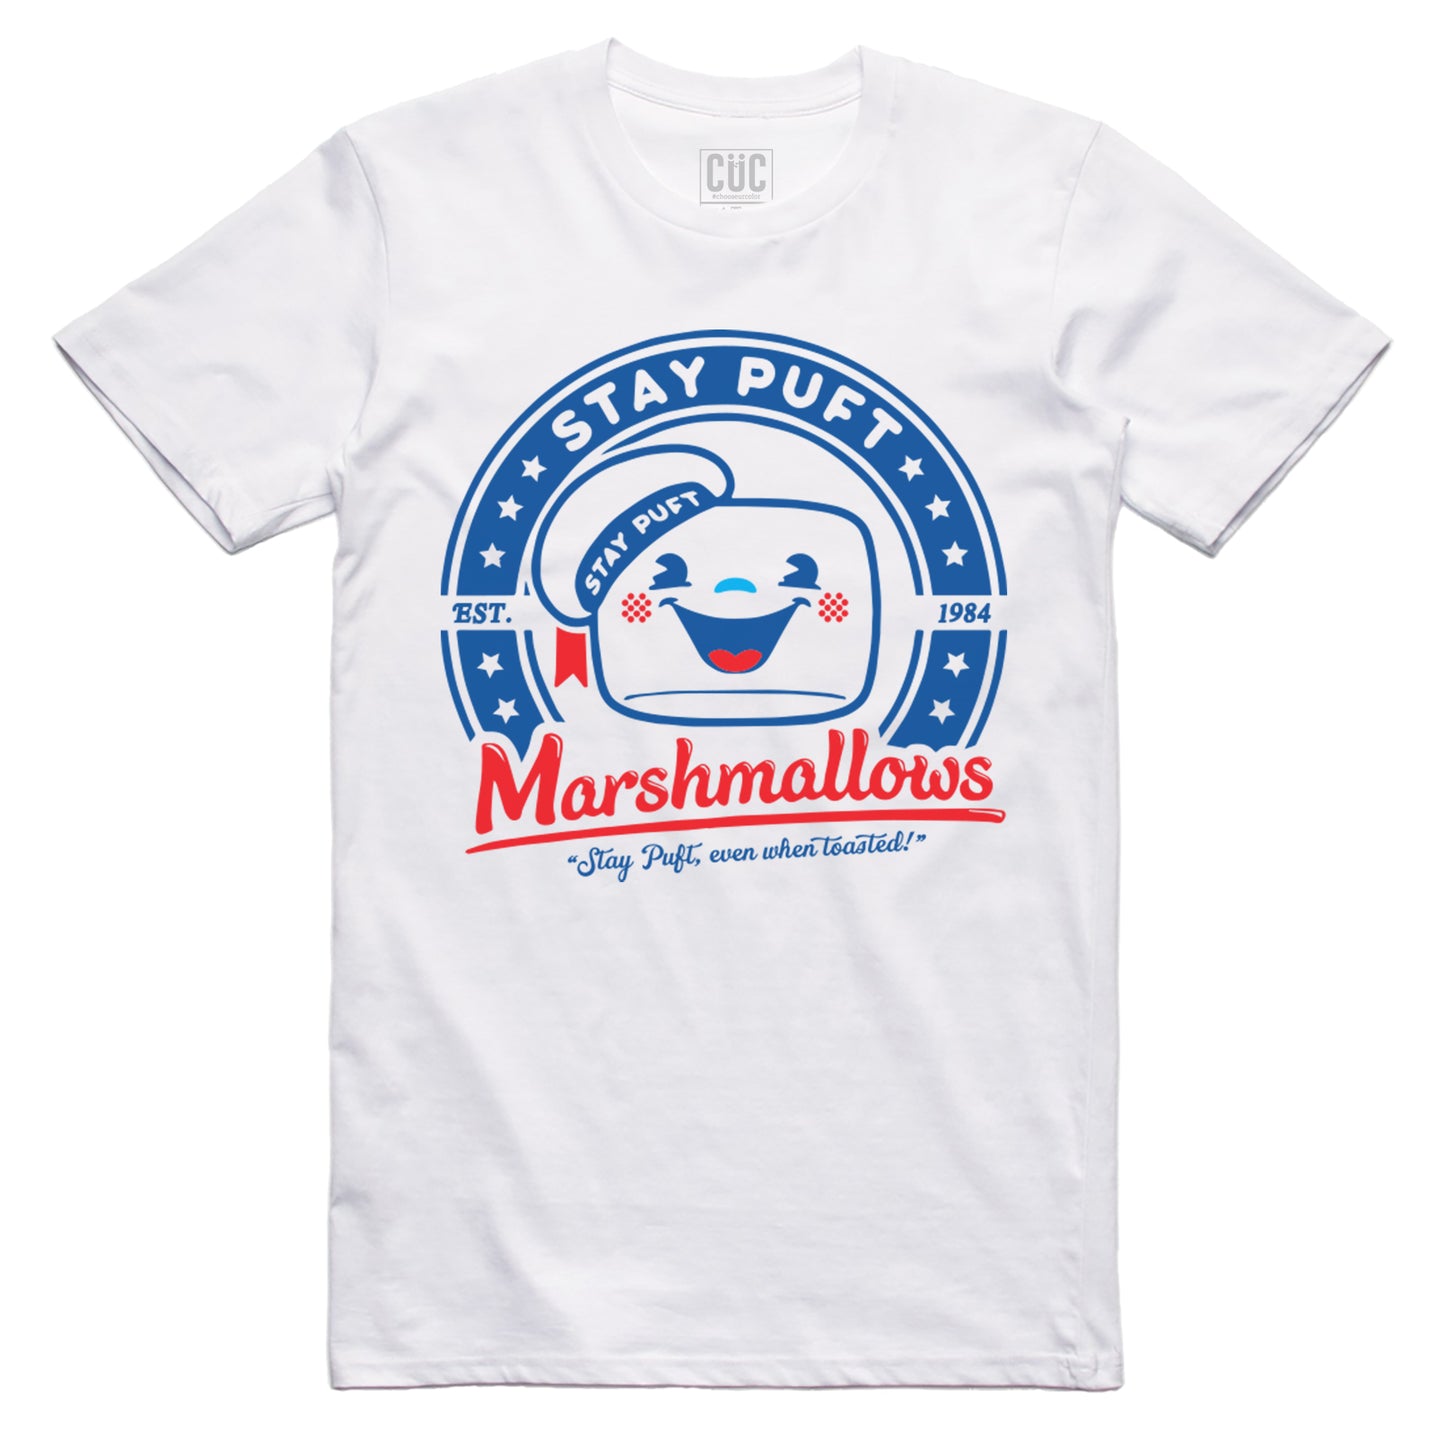 T-shirt Marshmallows - Film cult anni 90 - #chooseurcolor - CUC chooseurcolor